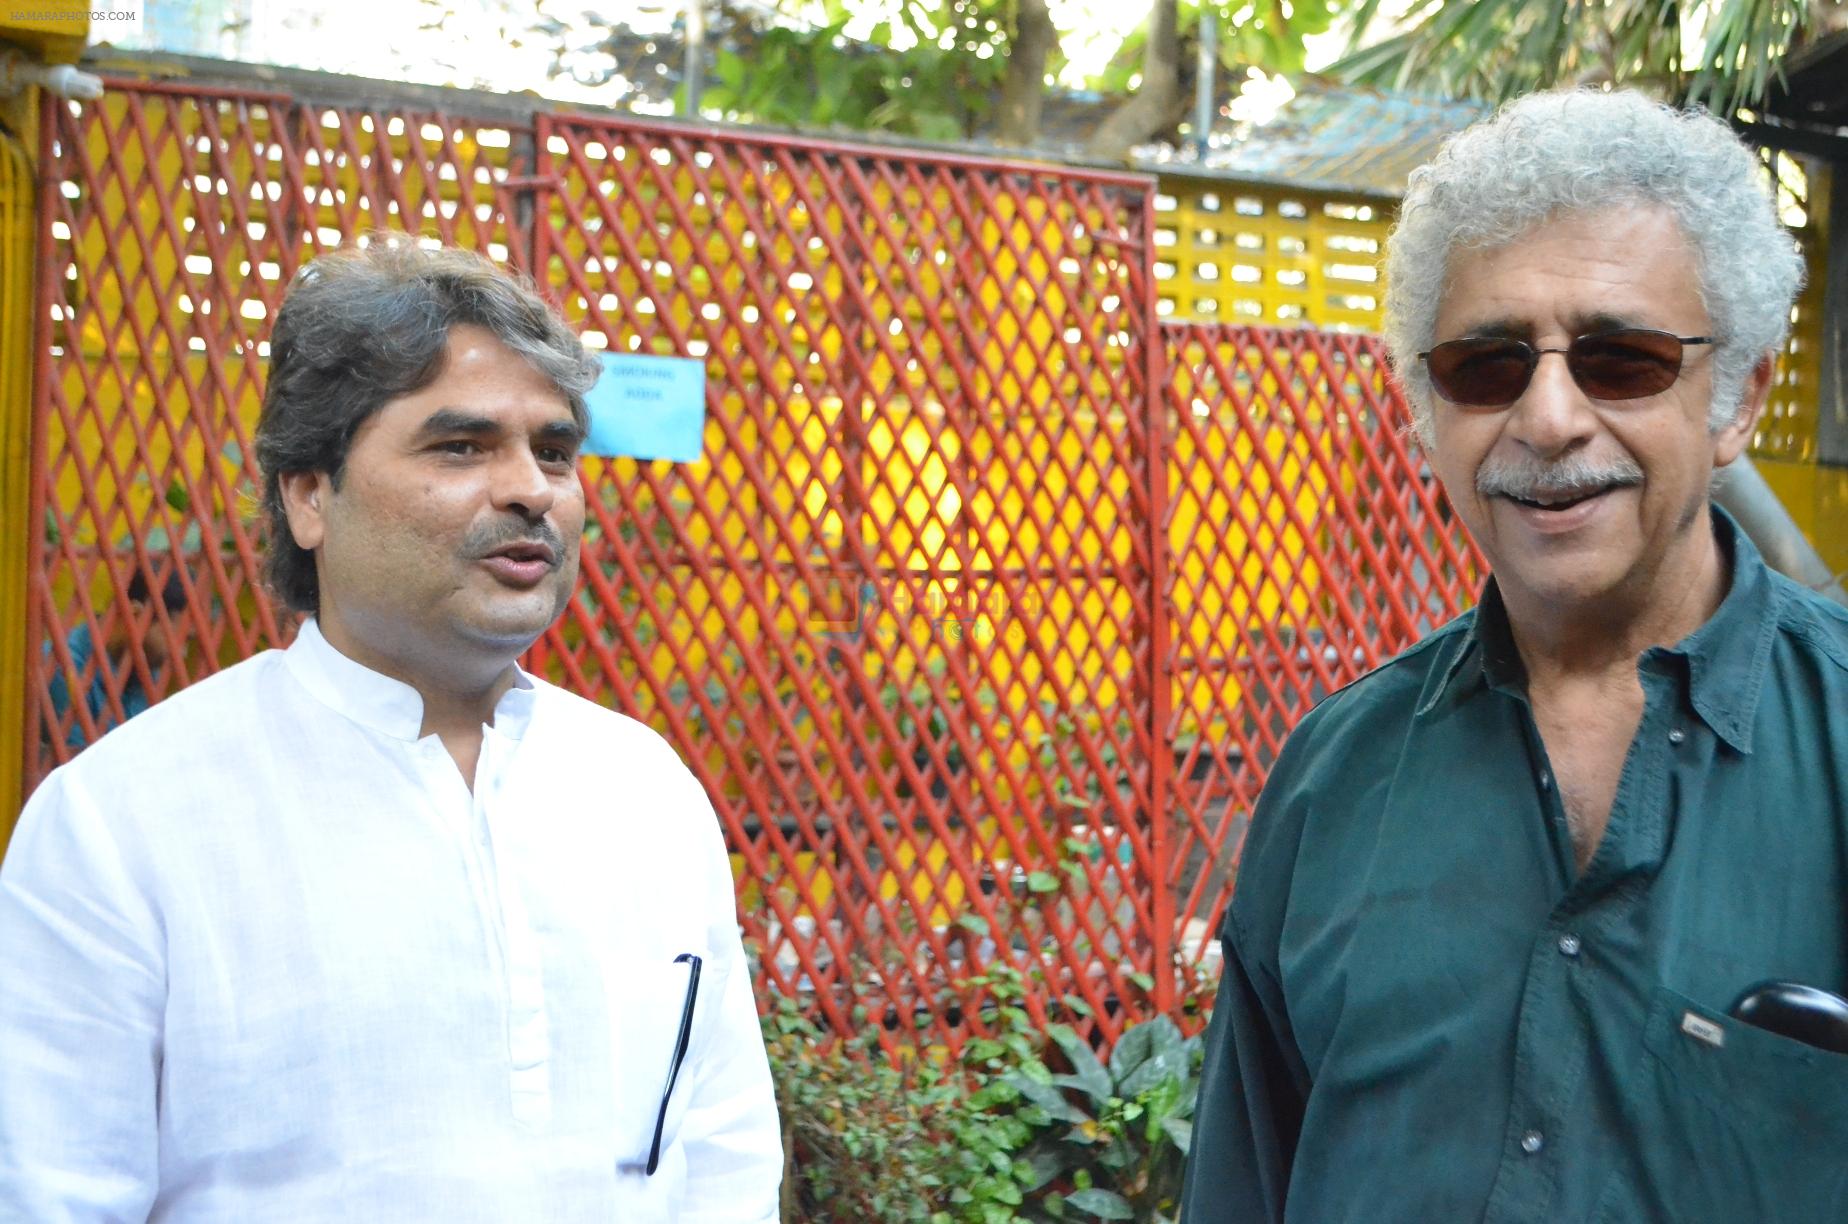 Vishal Bhardwaj and Naseeruddin Shah at Salim Arif's 2 days show at prithvi theatre in Mumbai on 23rd Dec 2012